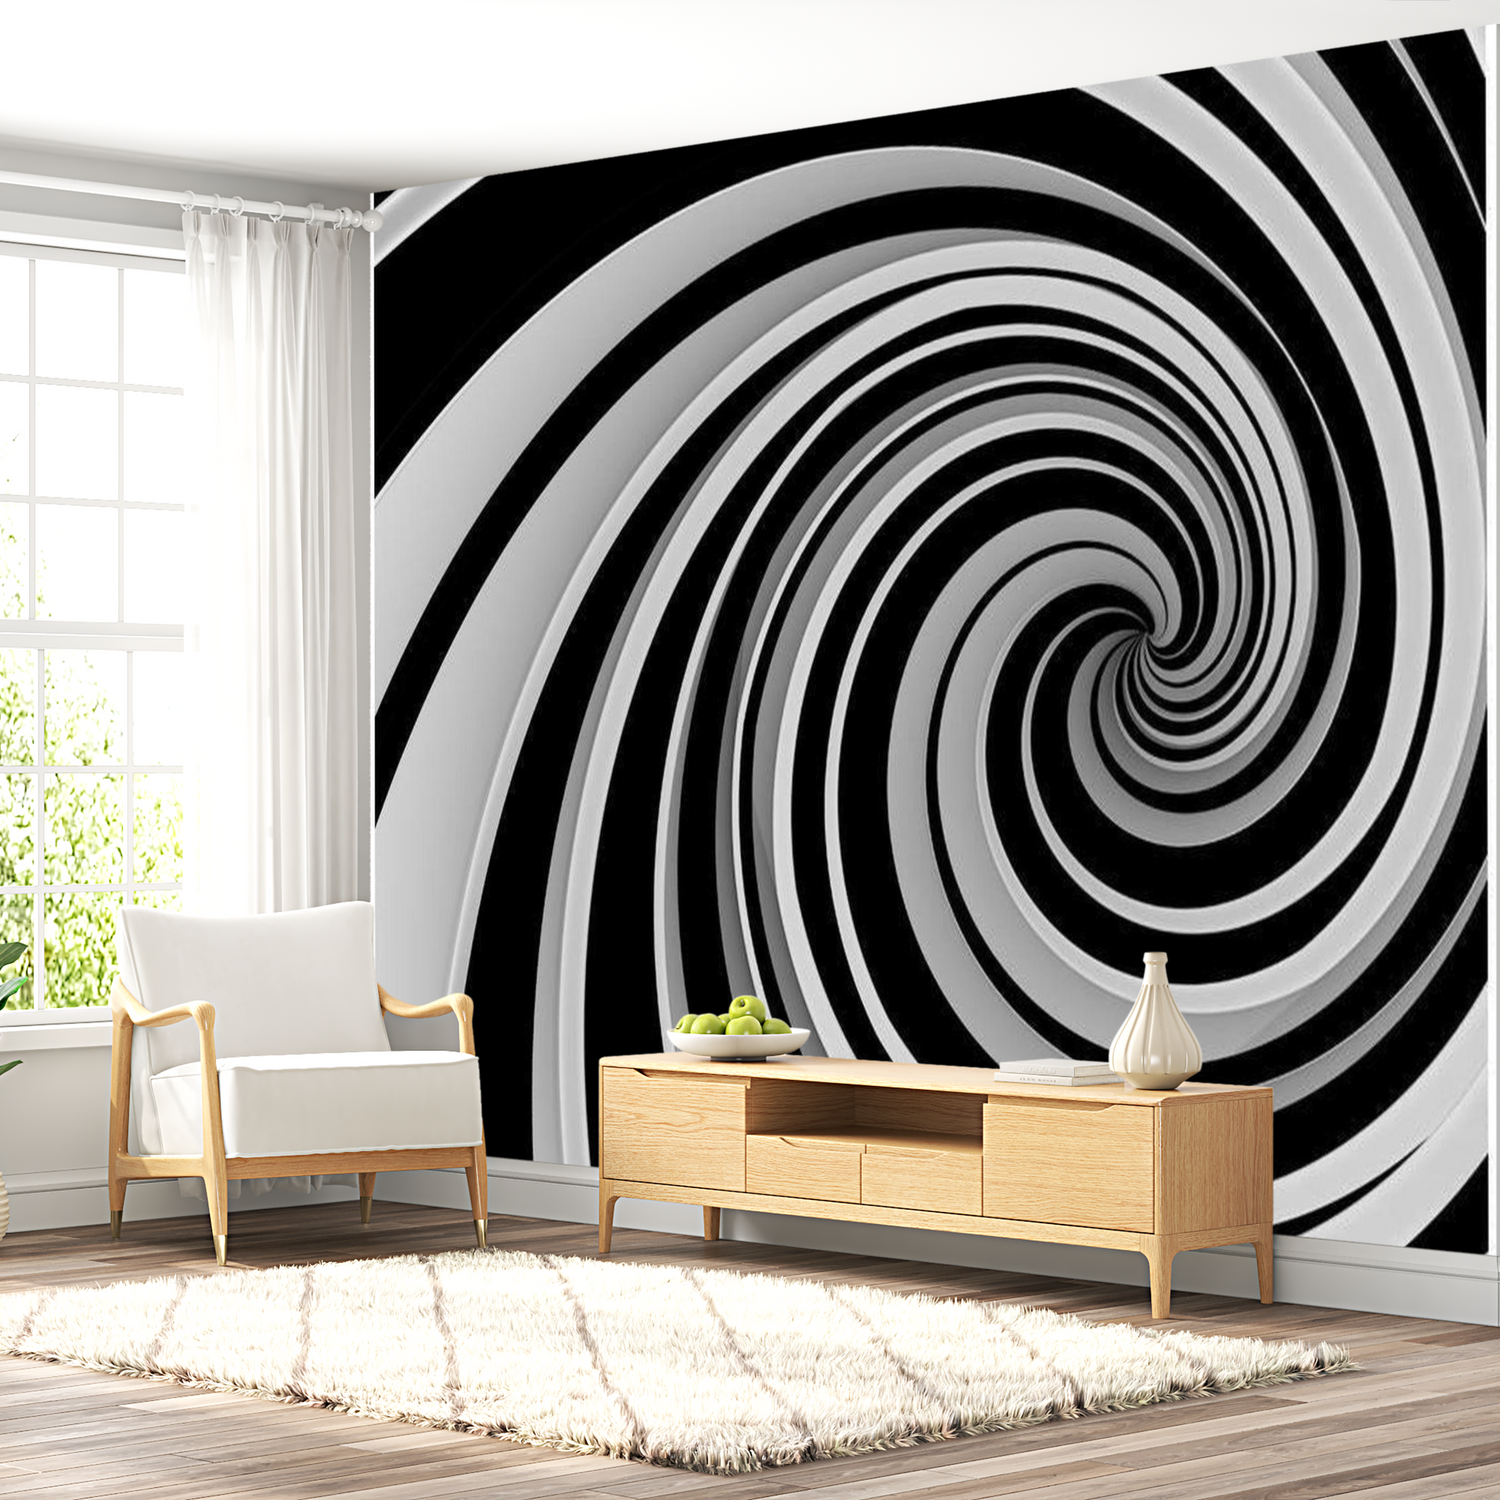 3D Illusion Wallpaper Wall Mural - Black & White Swirl 118"Wx90"H